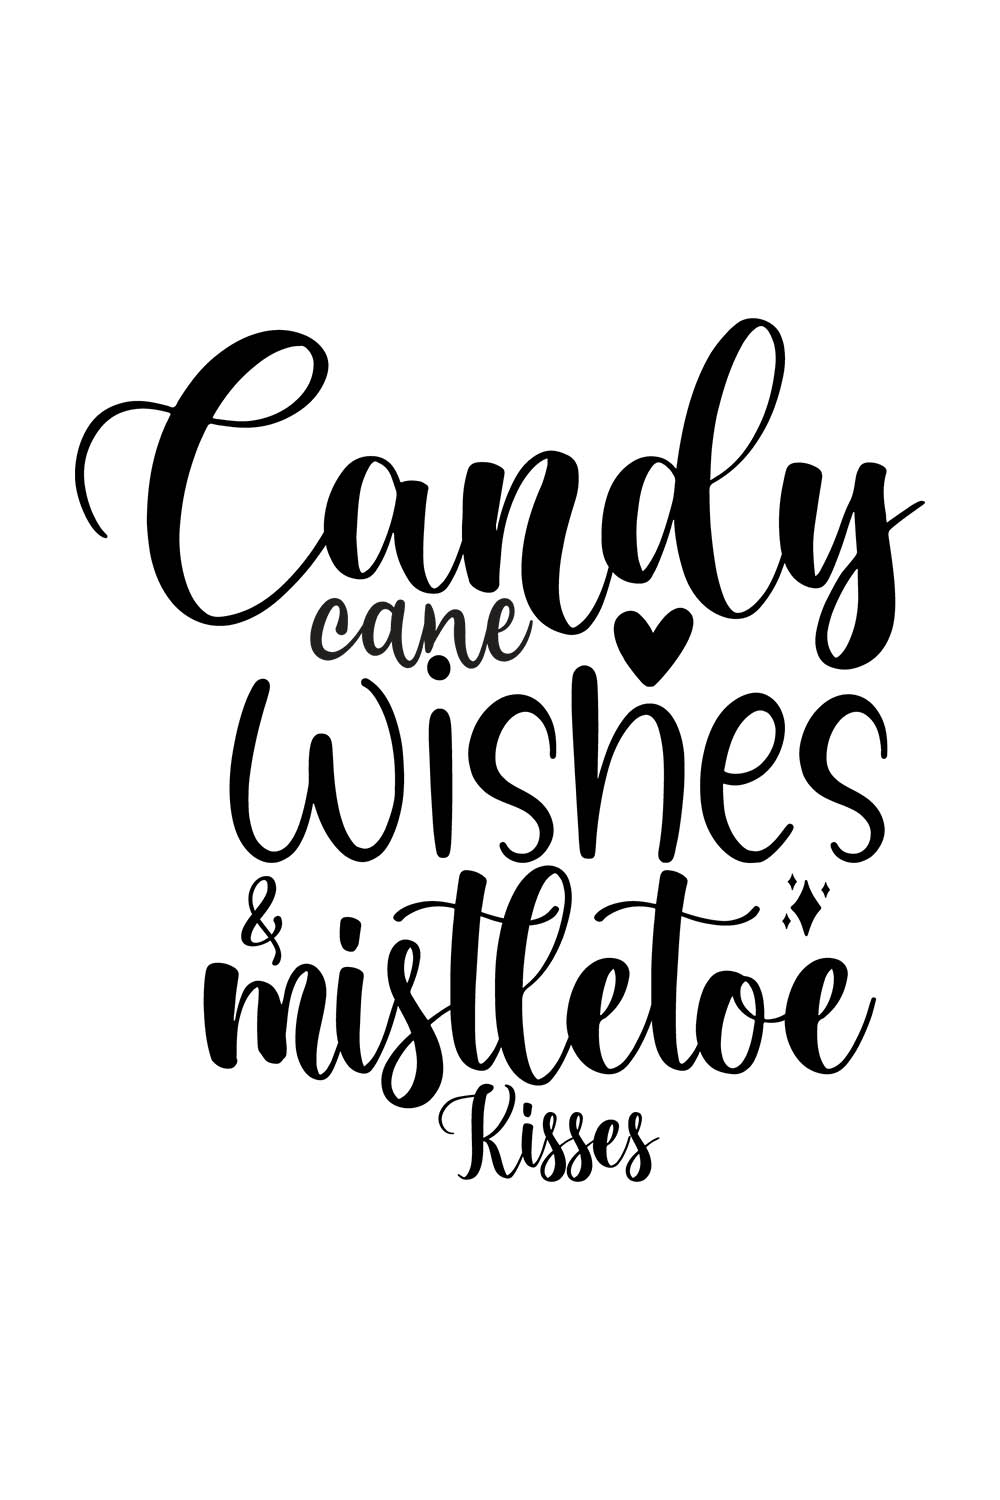 Image with elegant black lettering for Candy Cane Wishes & Mistletoe Kisses prints.